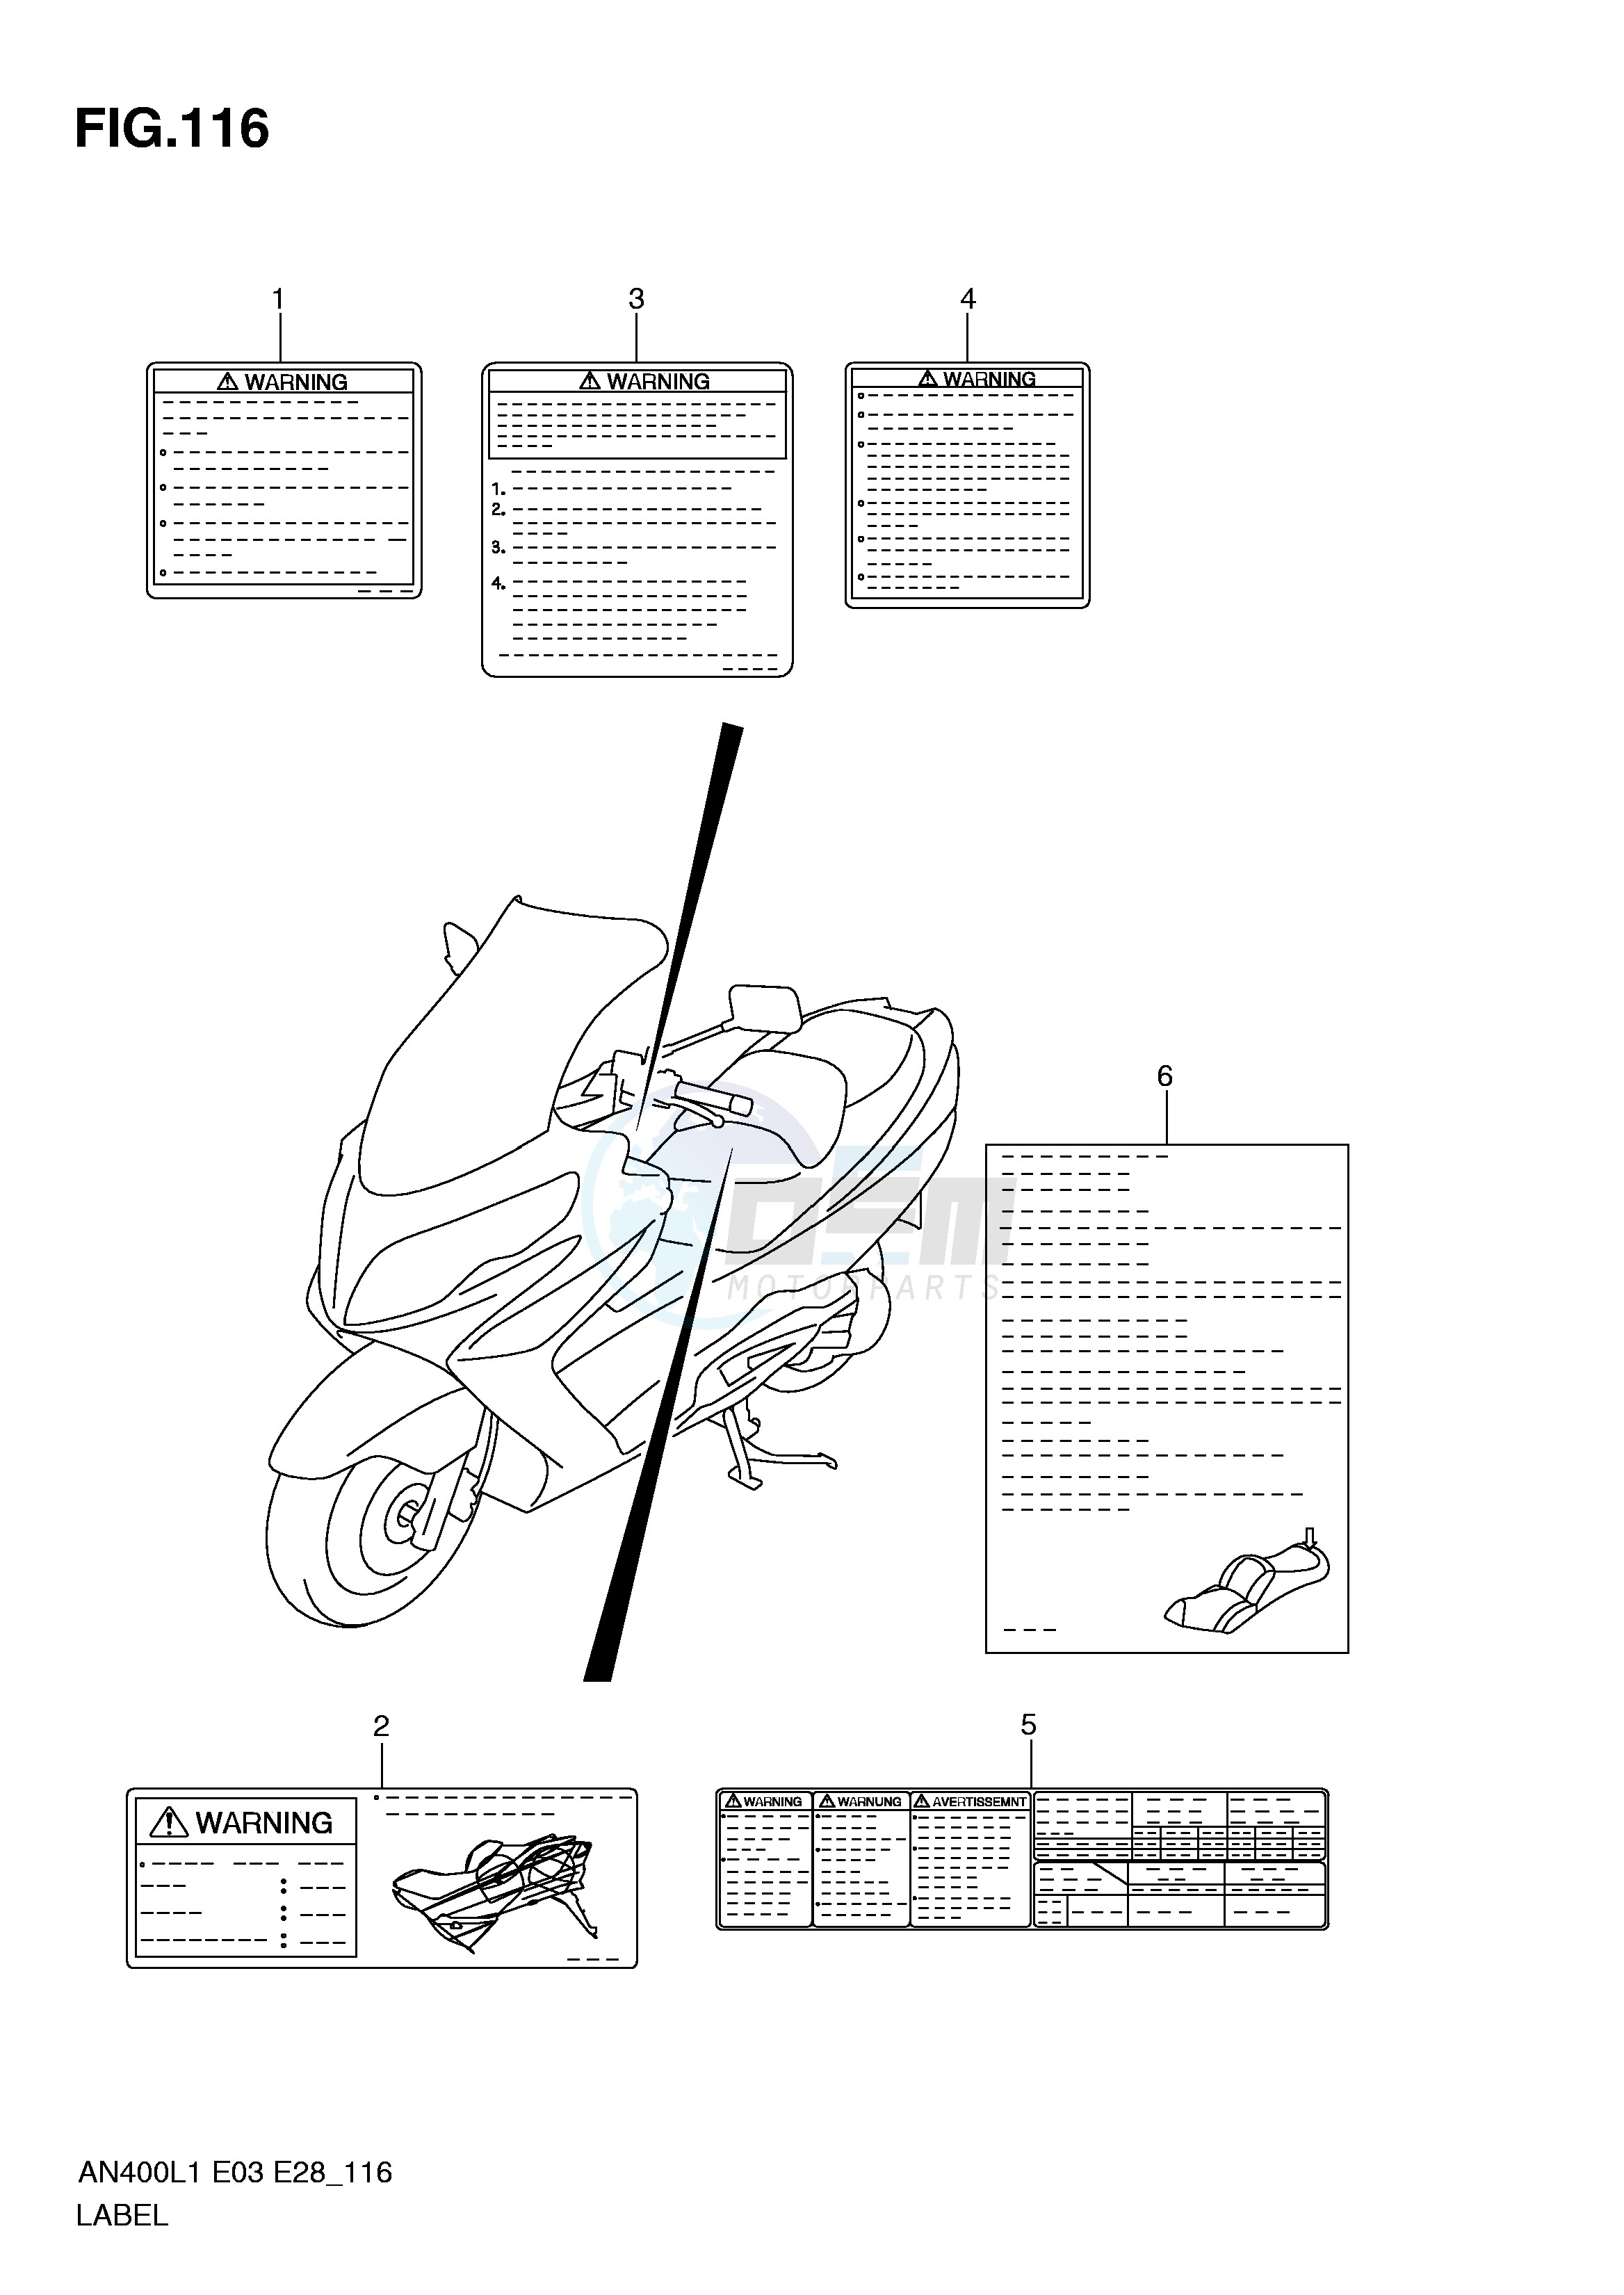 LABEL (AN400ZAL1 E28) blueprint